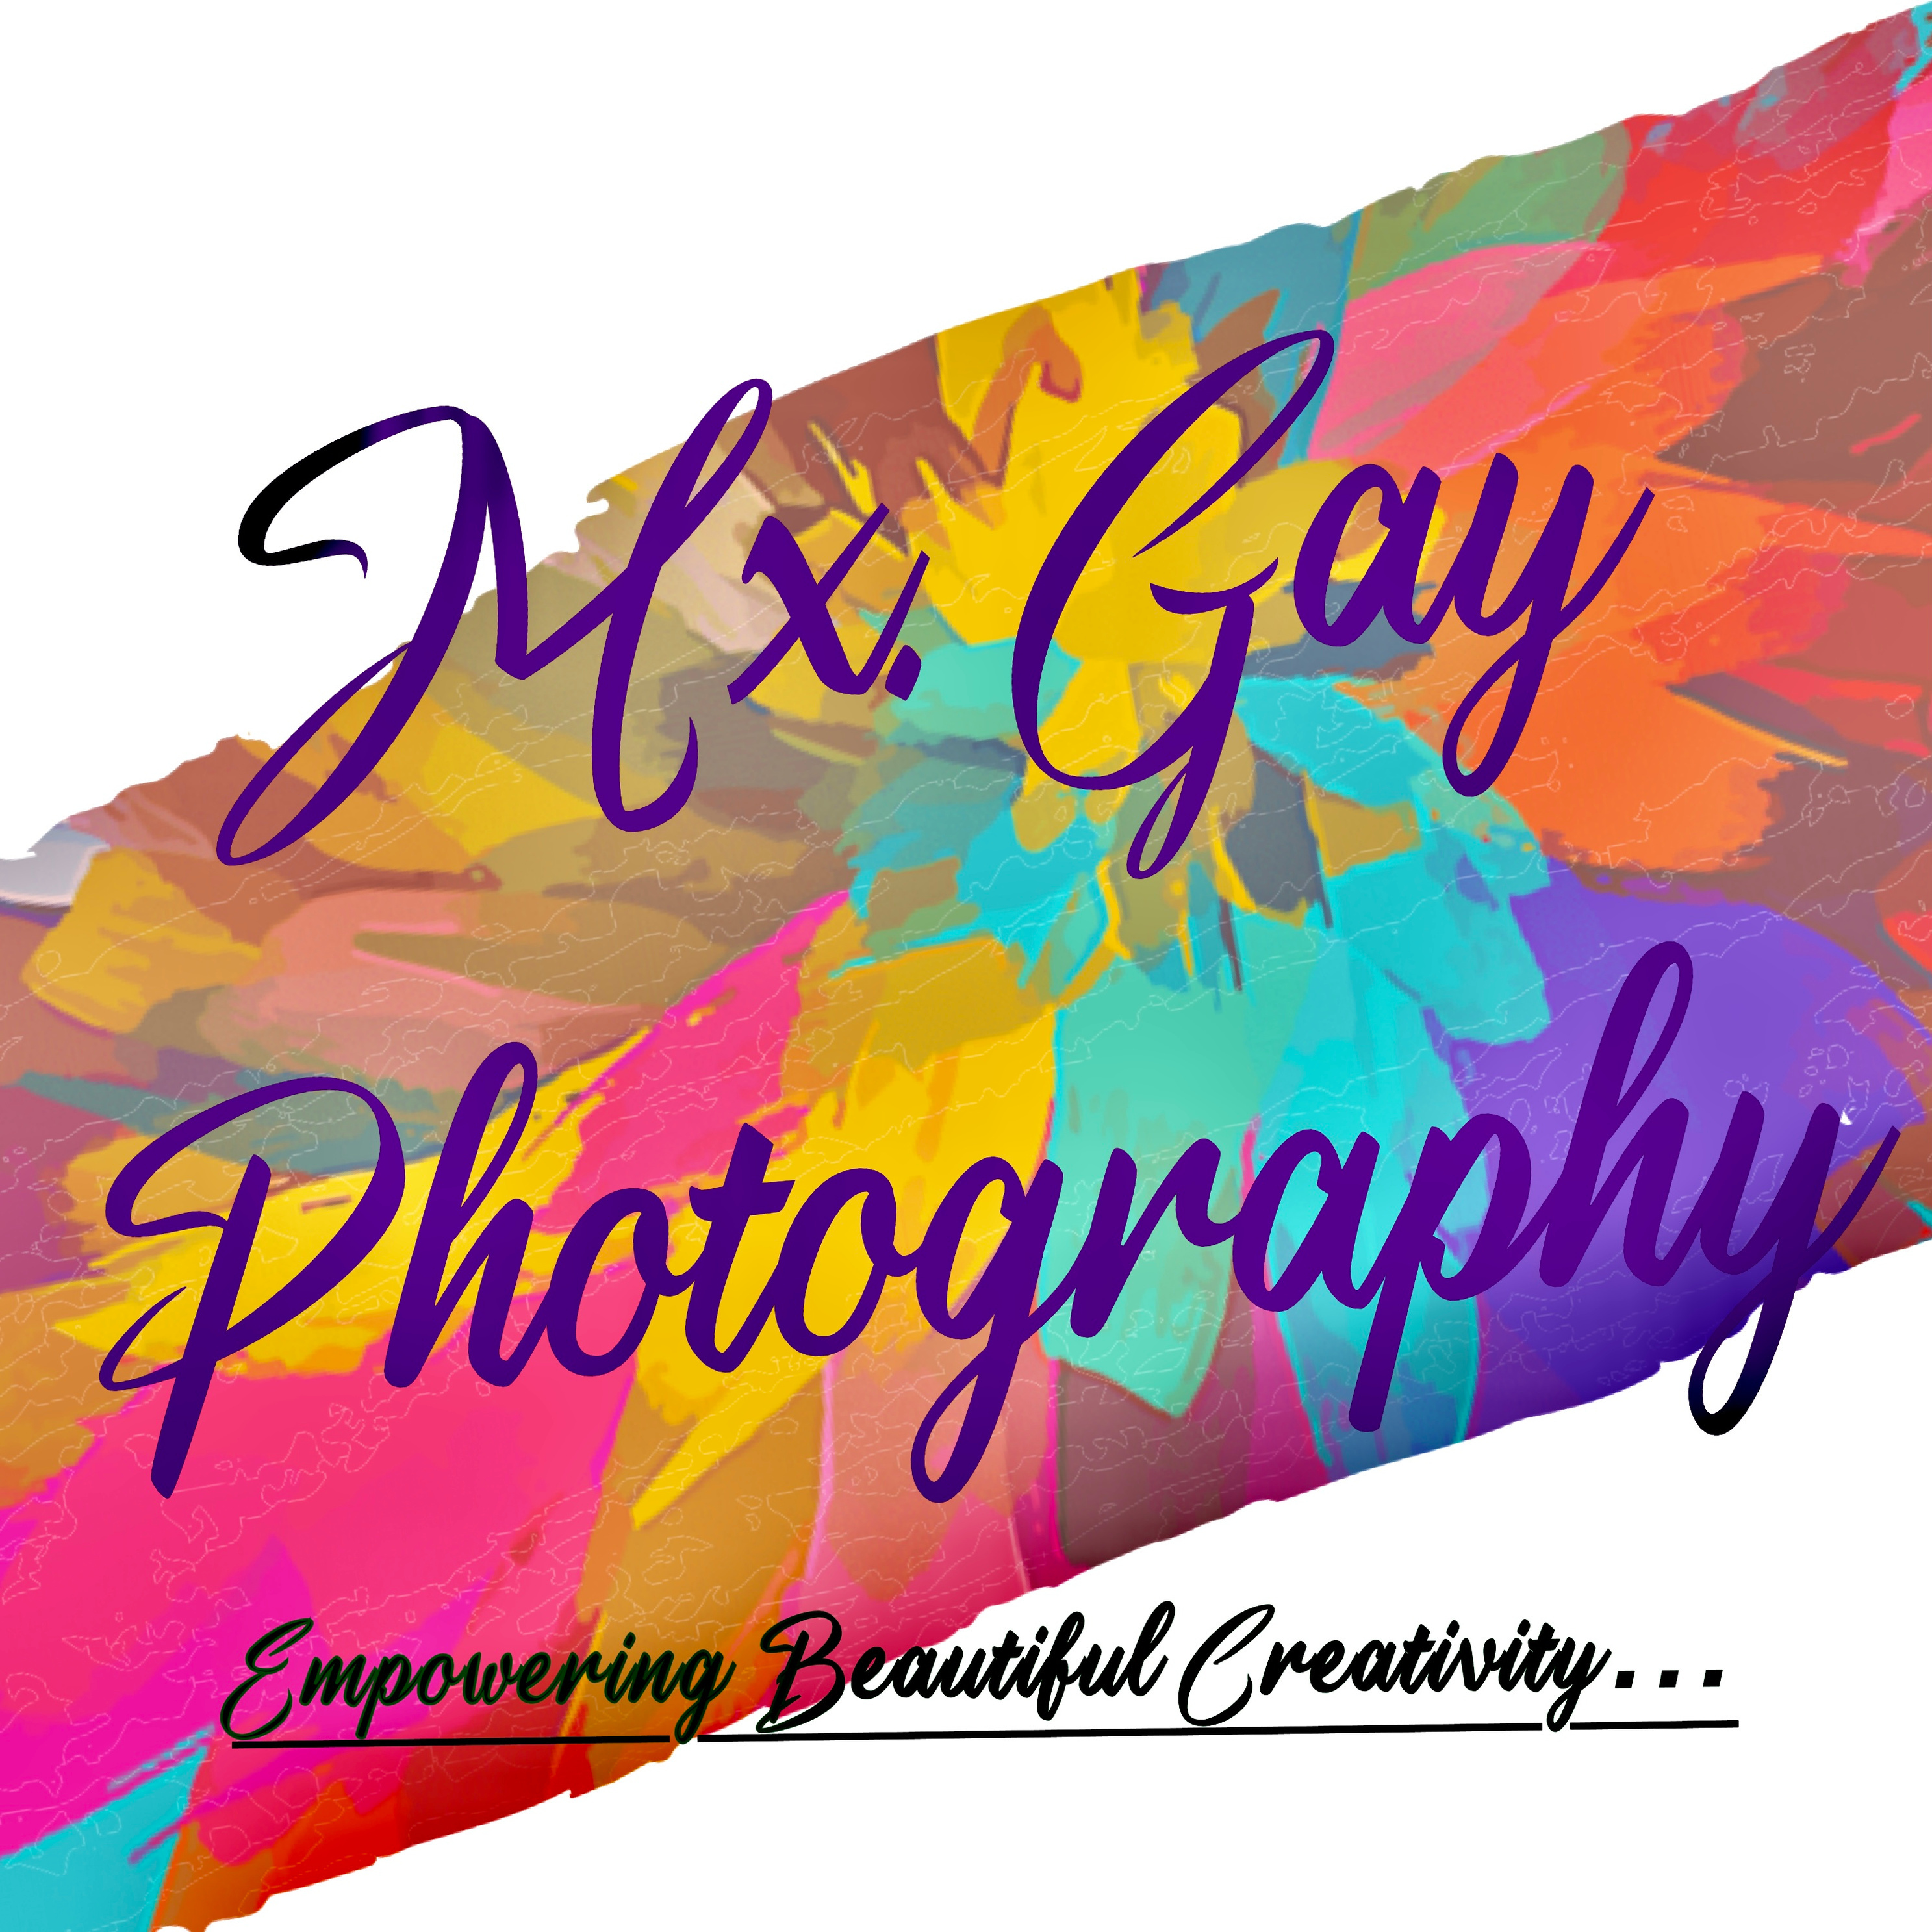 Mx. Gay's Creative Direction